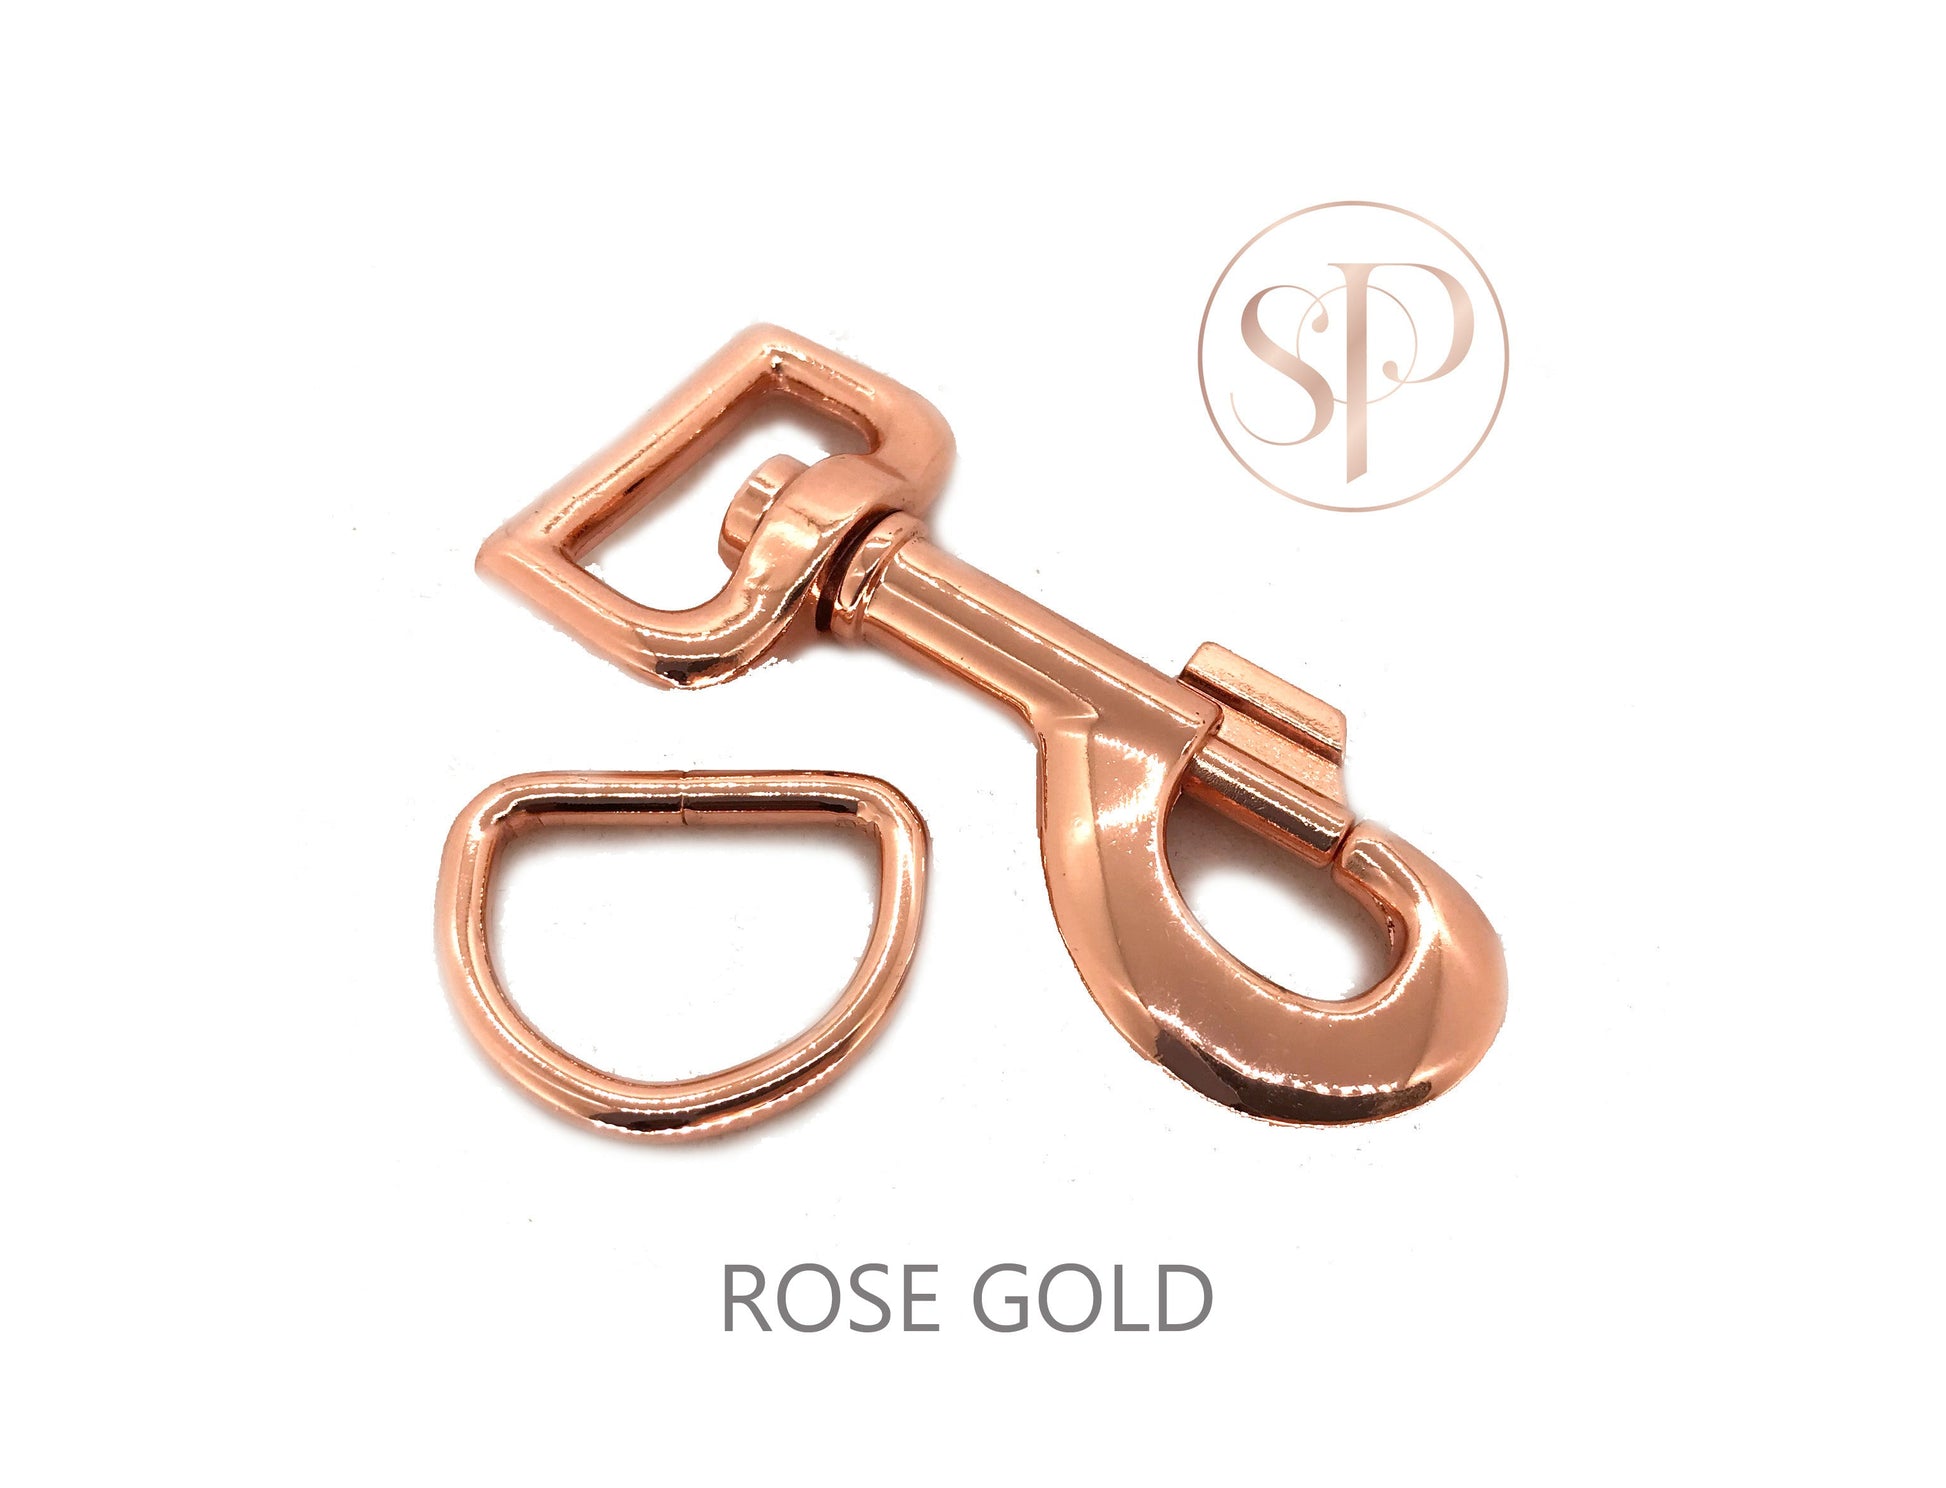 Rose Gold hardware